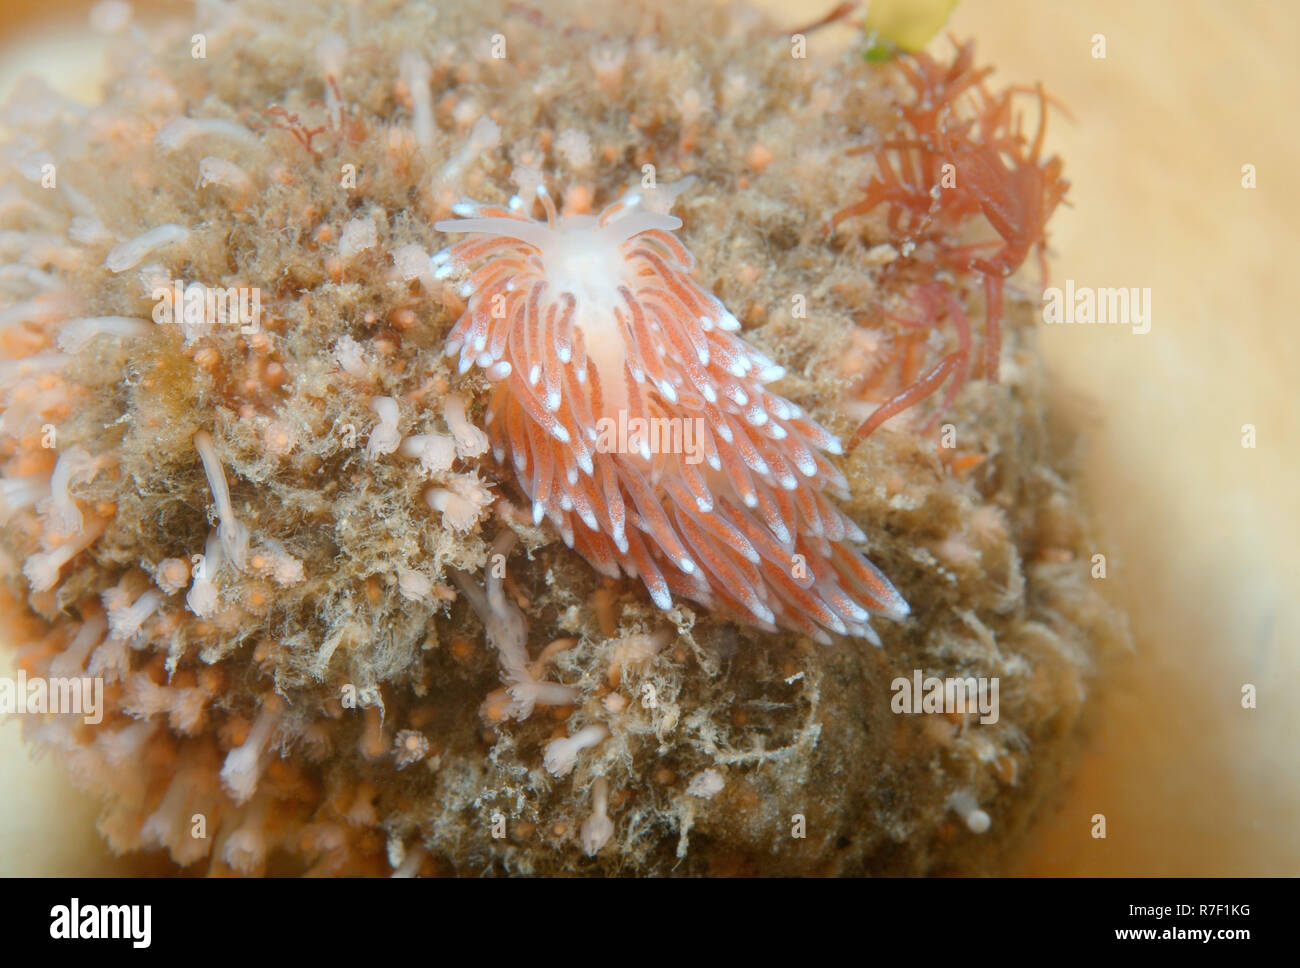 Aeolid Nudibranch (Cuthona nana), Sea of Japan, Russia Stock Photo